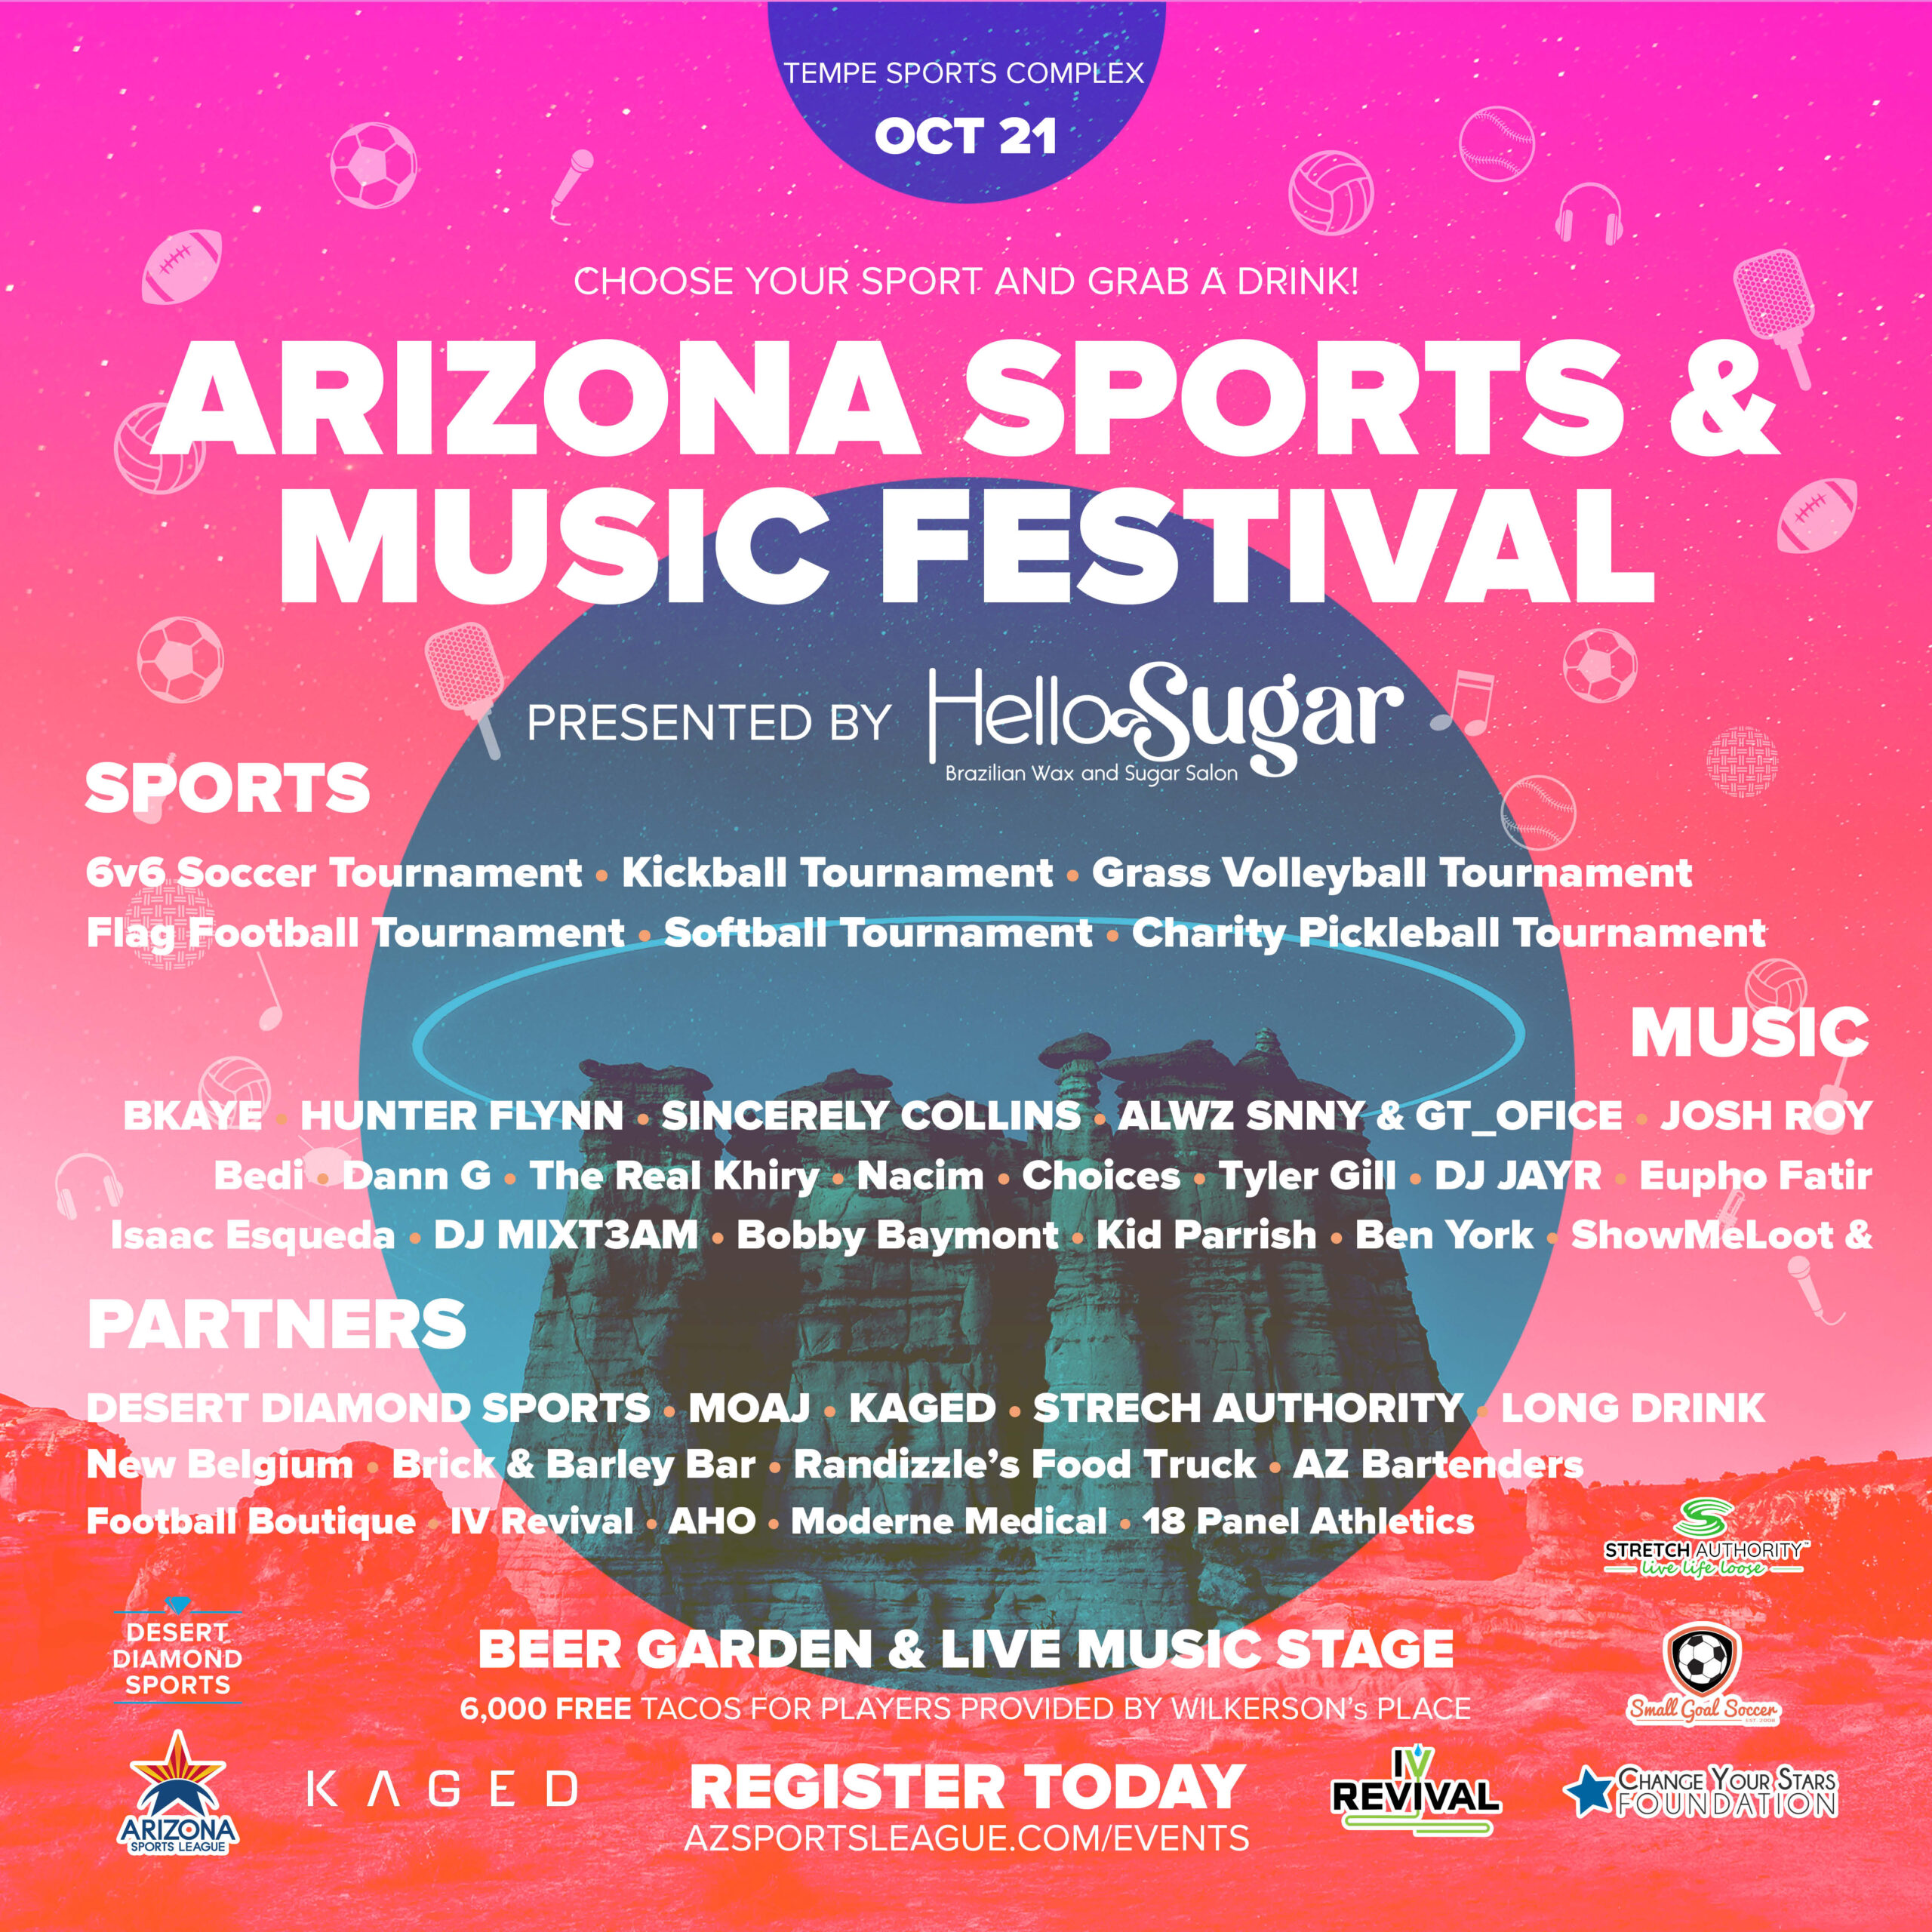 Arizona Sports and Music Festival - Oct